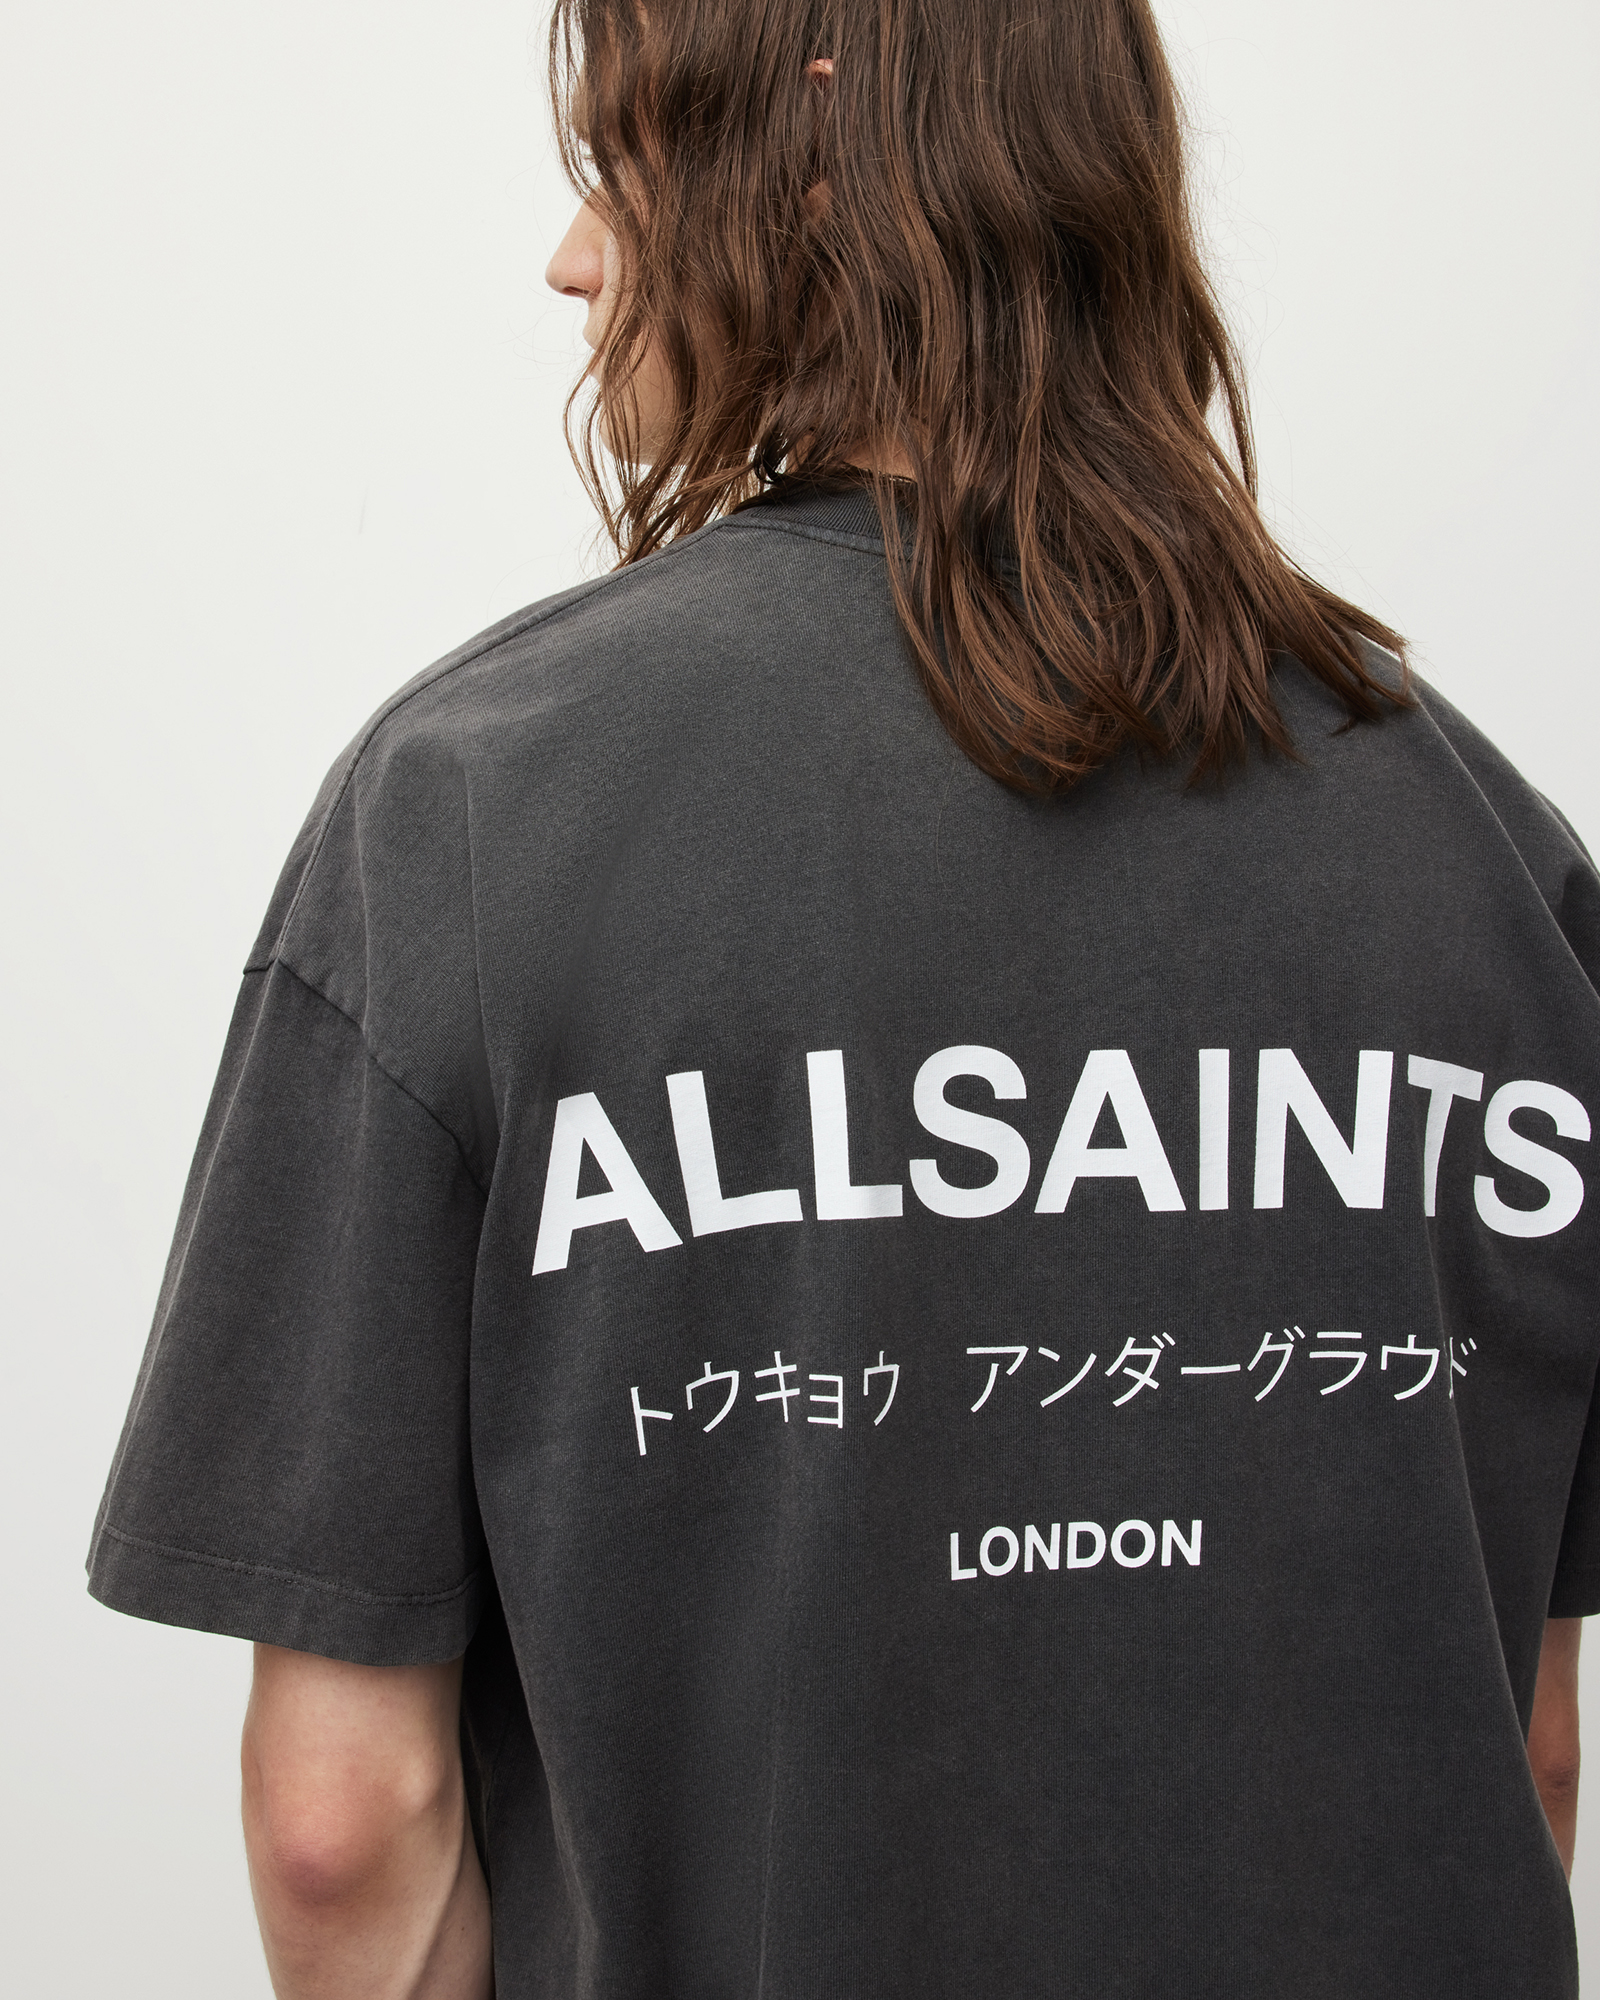 AllSaints Underground Oversized Crew Neck T-Shirt,, Black